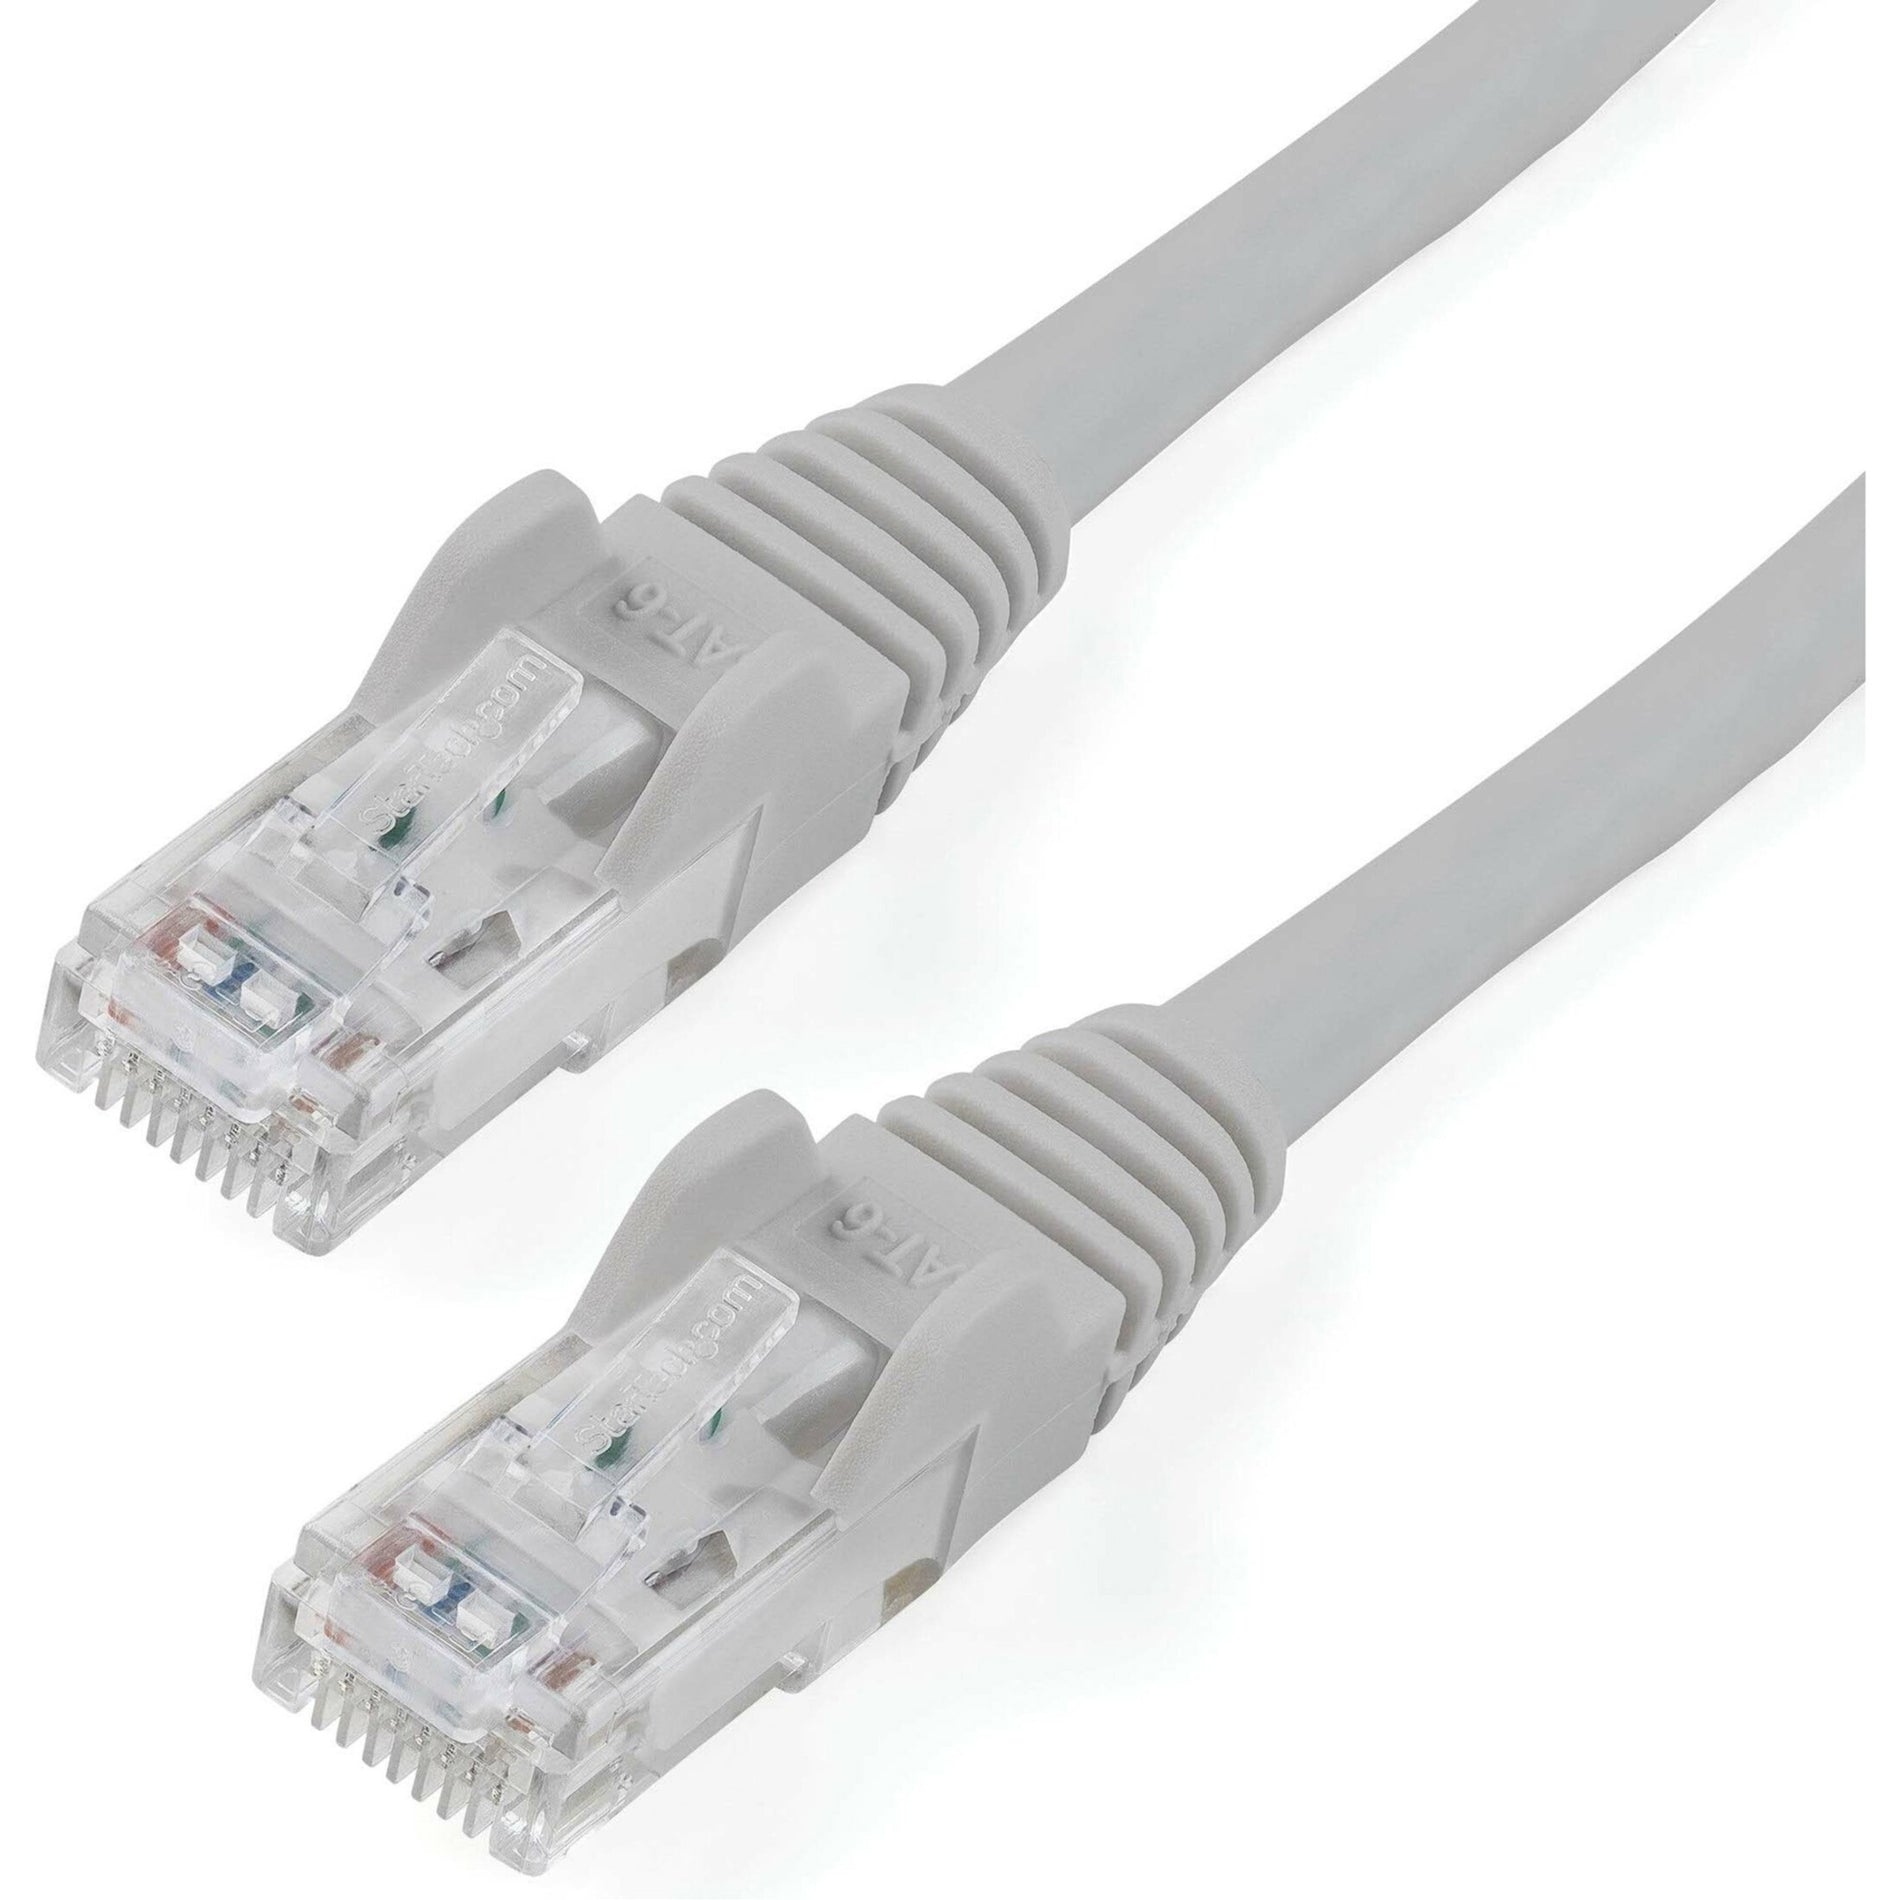 StarTech.com N6PATCH6GR Cat6 Cable, 6 ft Gray Ethernet Cable, Snagless RJ45 Connectors